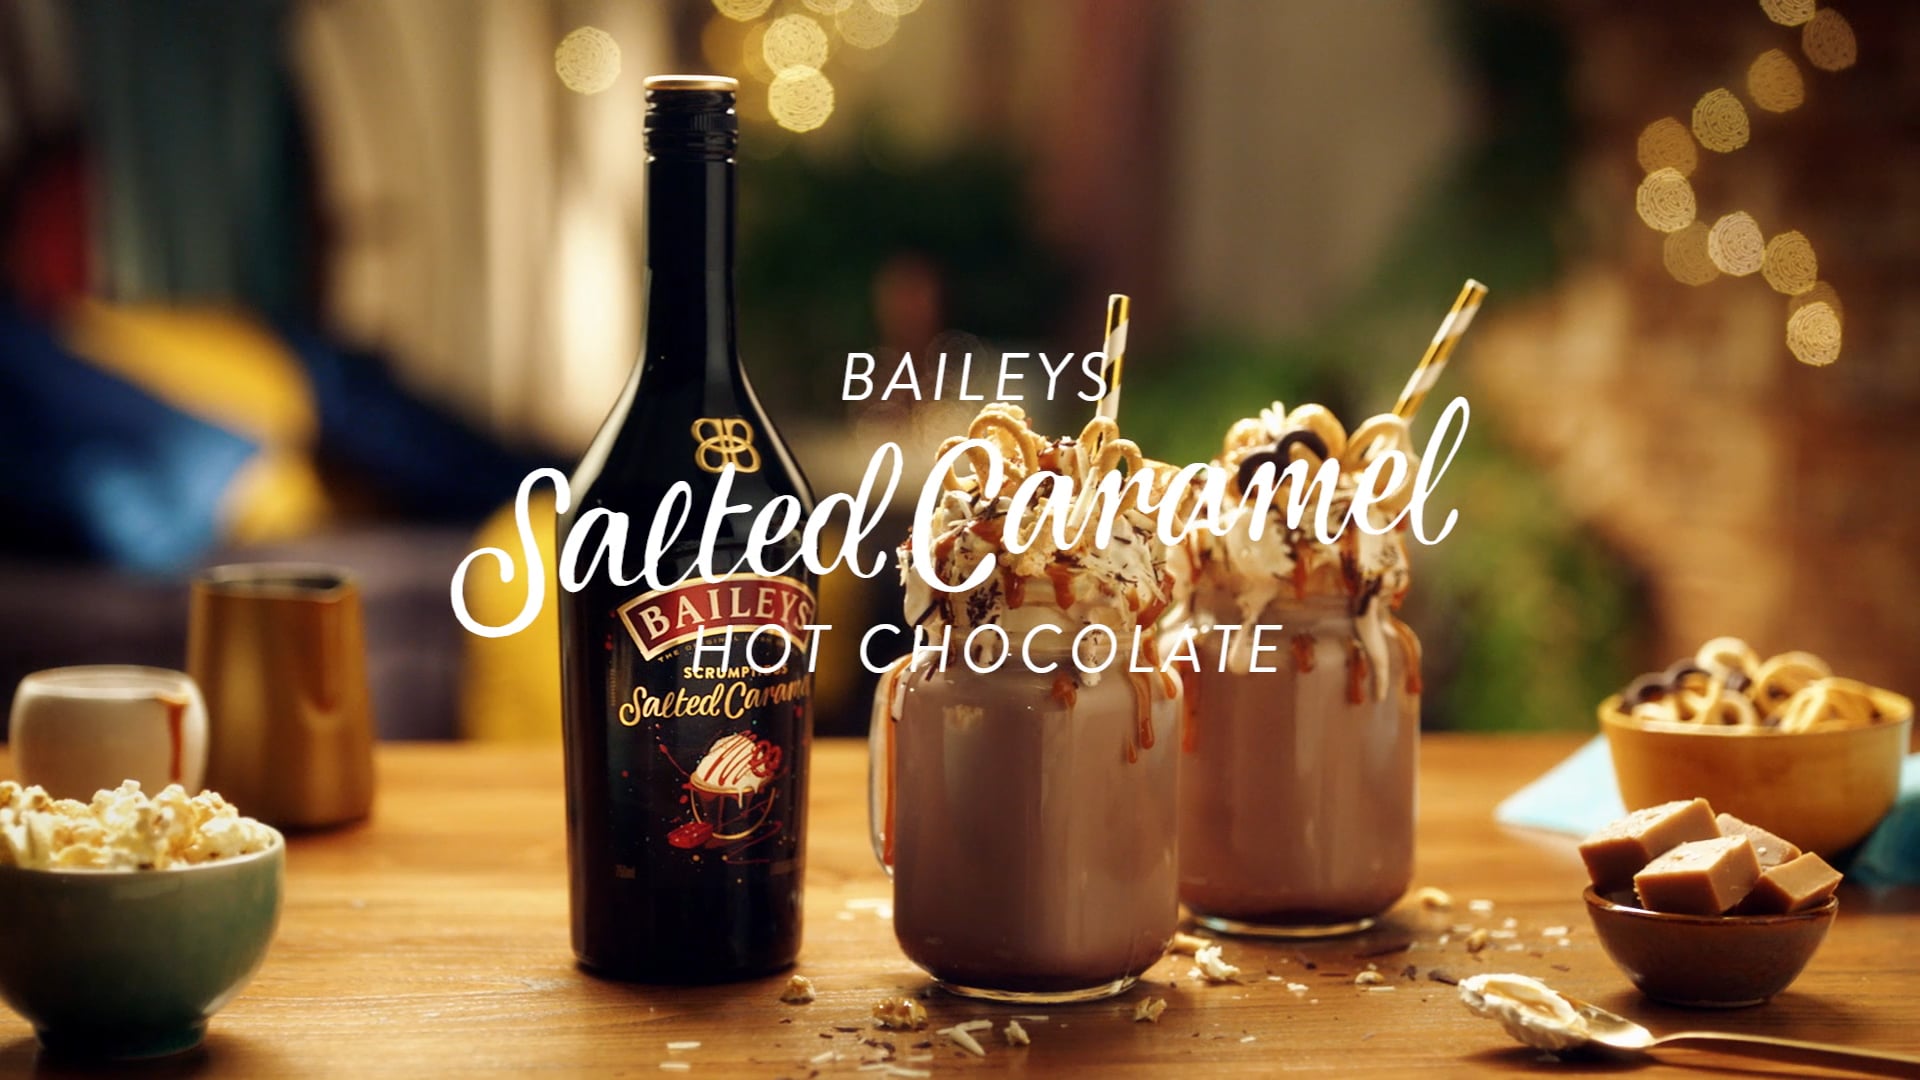 BAILEYS SALTED CARAMEL HOT CHOCOLATE